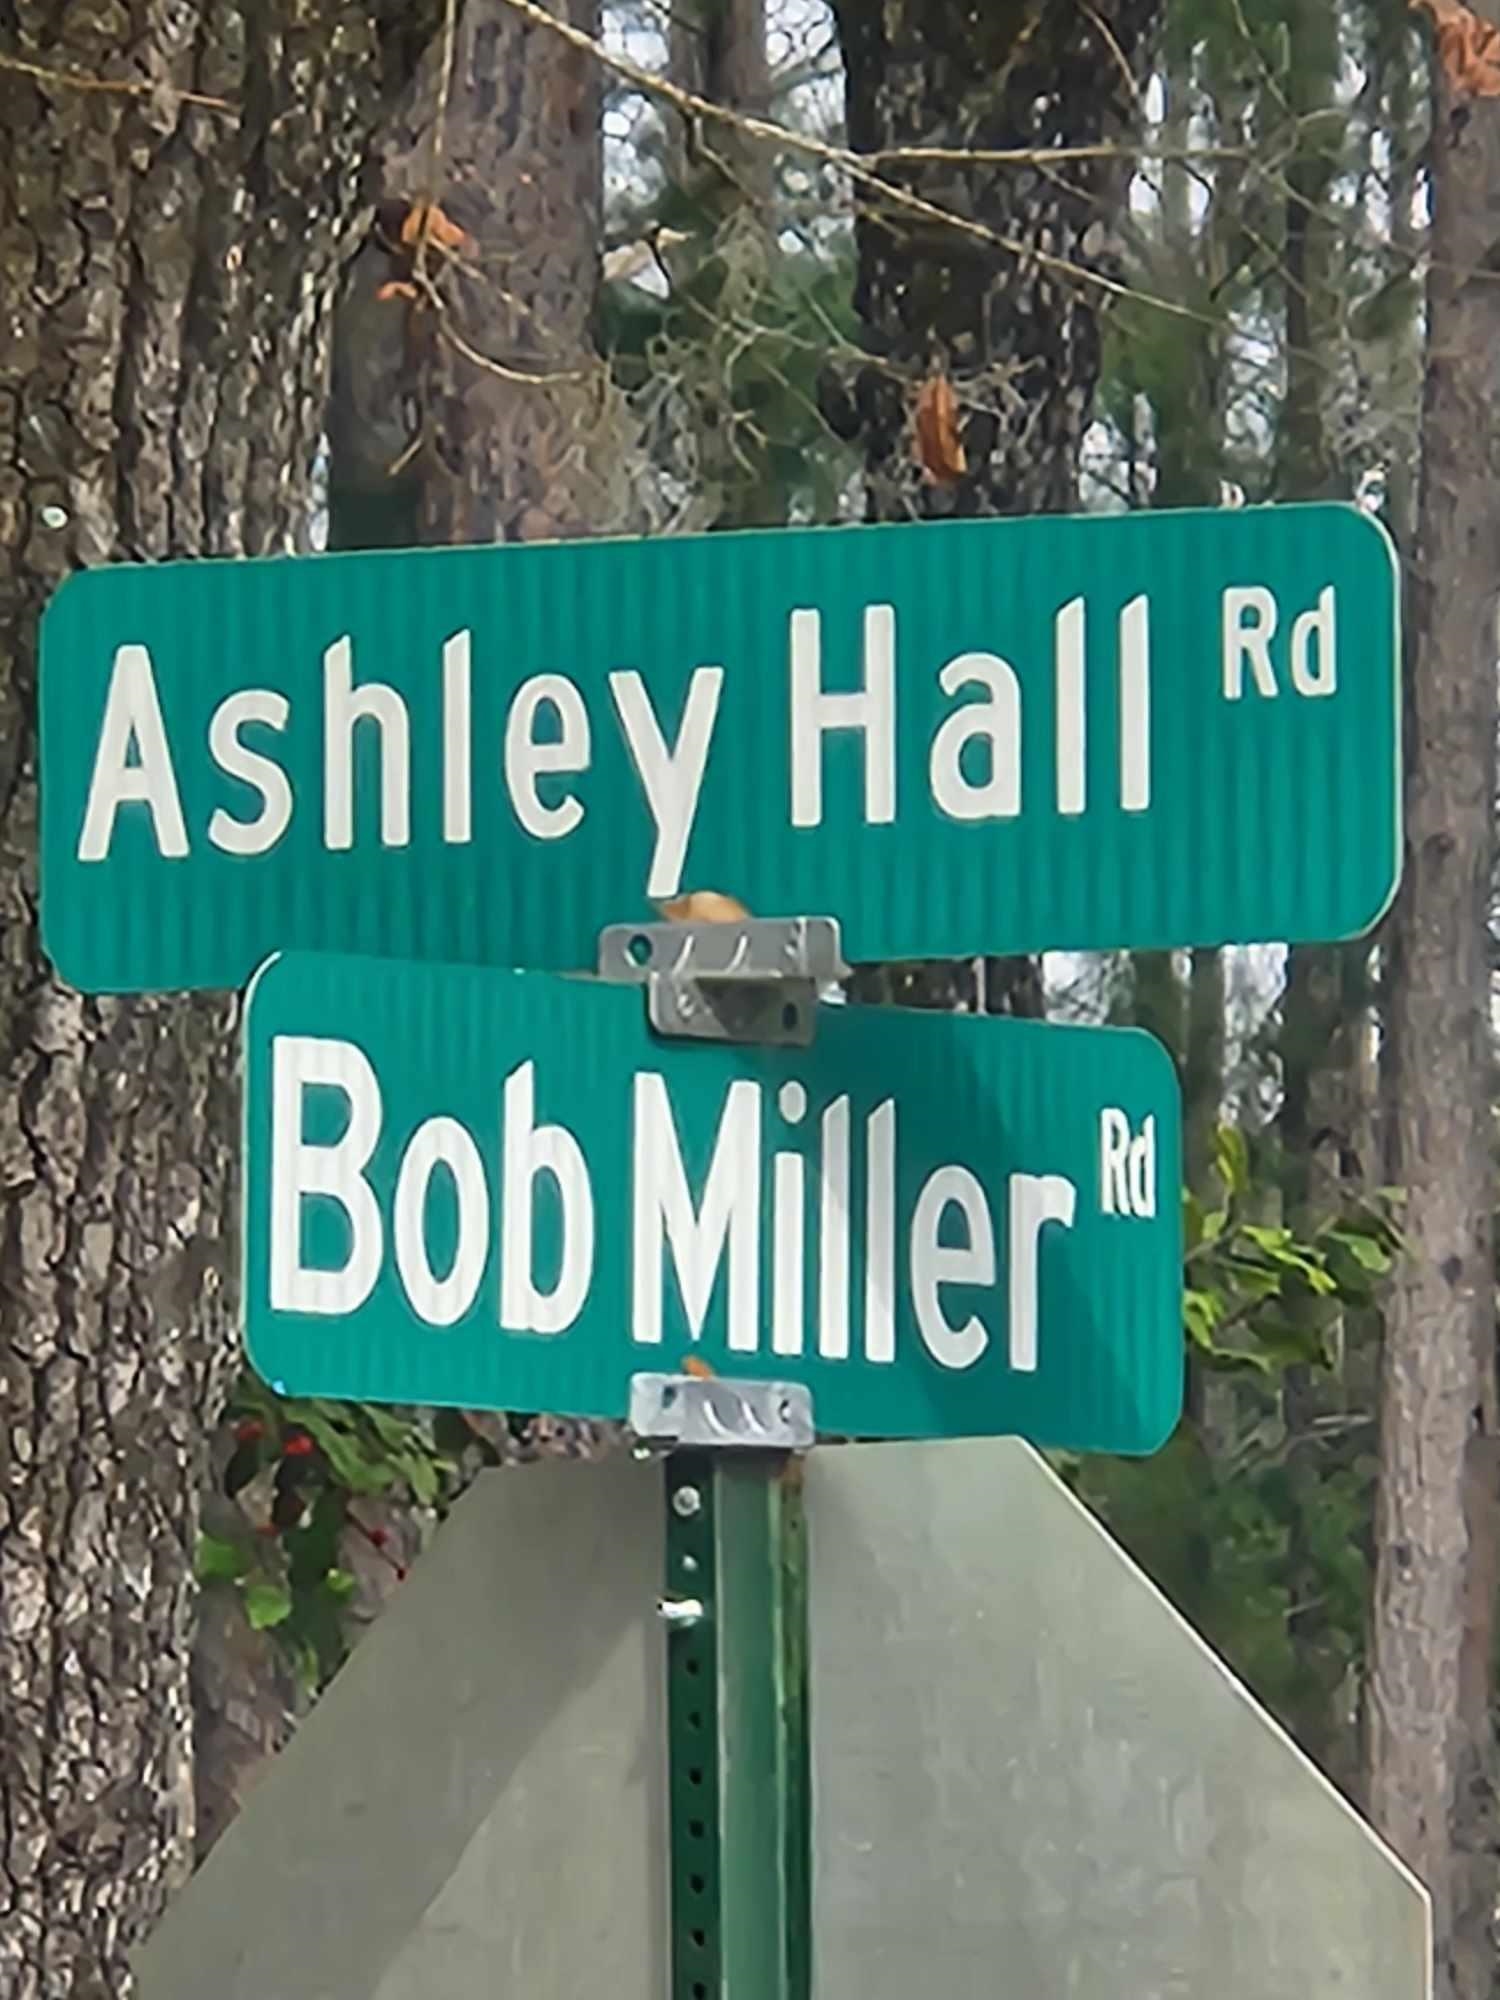 190 Ashley Hall Road,CRAWFORDVILLE,Florida 32327,3 Bedrooms Bedrooms,2 BathroomsBathrooms,Manuf/mobile home,190 Ashley Hall Road,369139